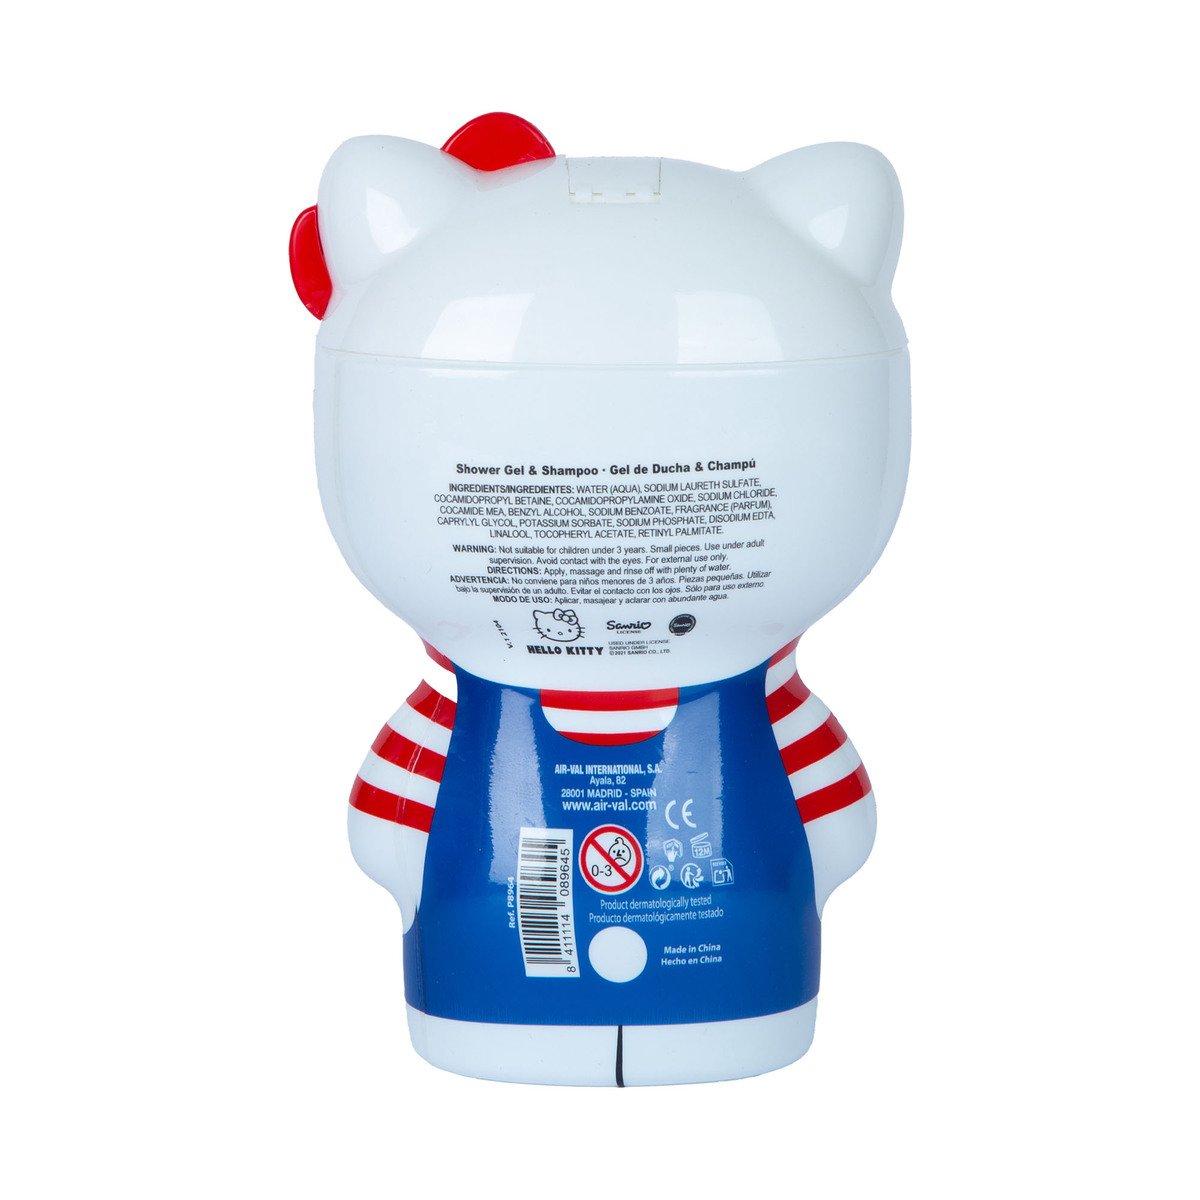 Air-Val Hello Kitty 2in1 Shower Gel & Shampoo 400 ml